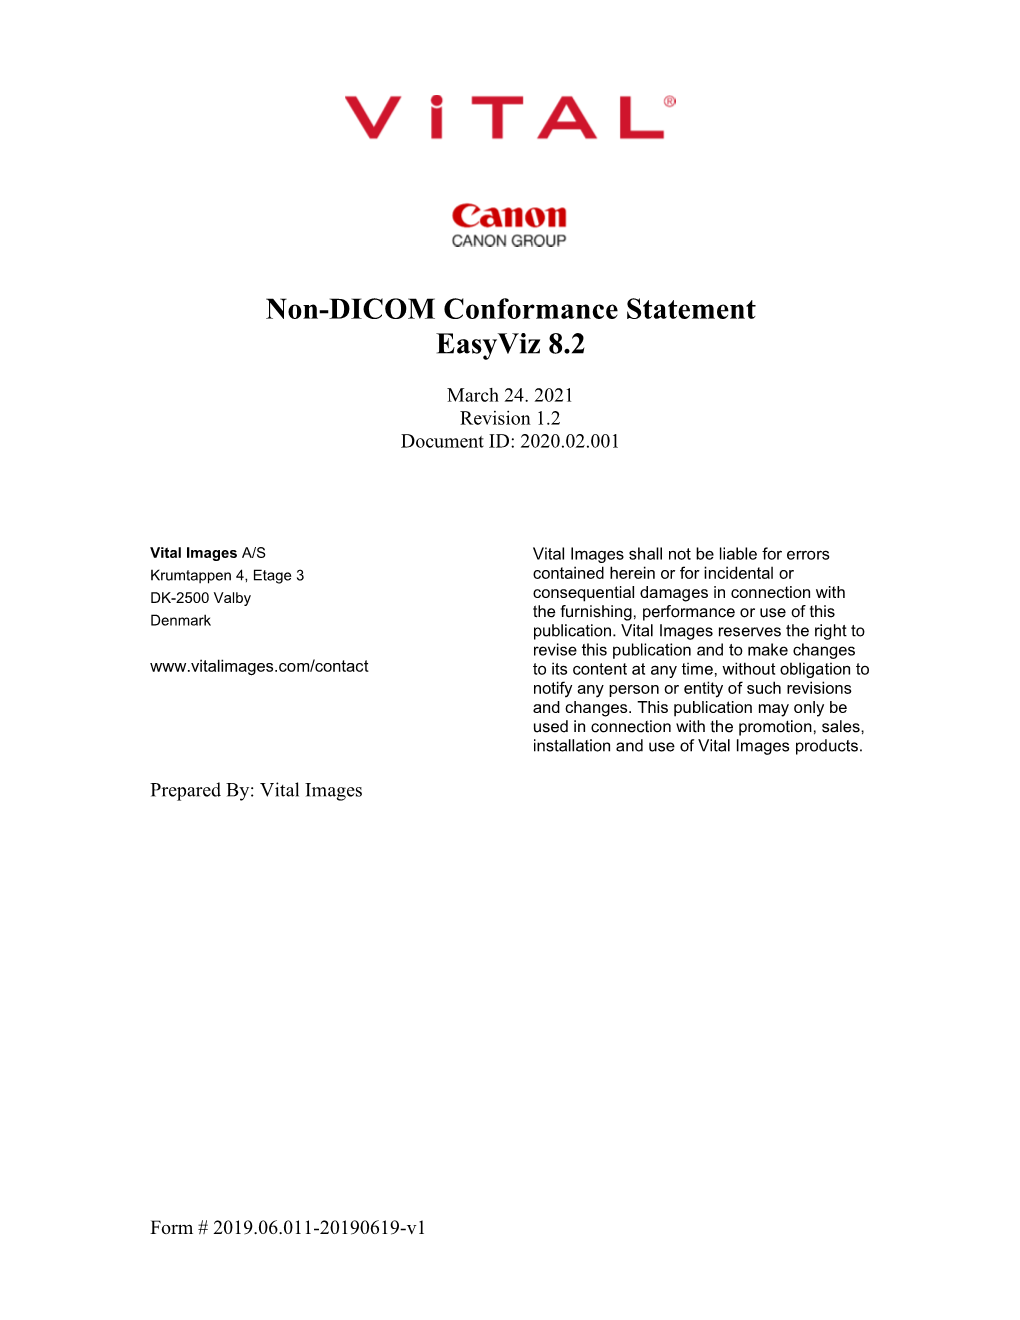 Non-DICOM Conformance Statement Easyviz 8.2